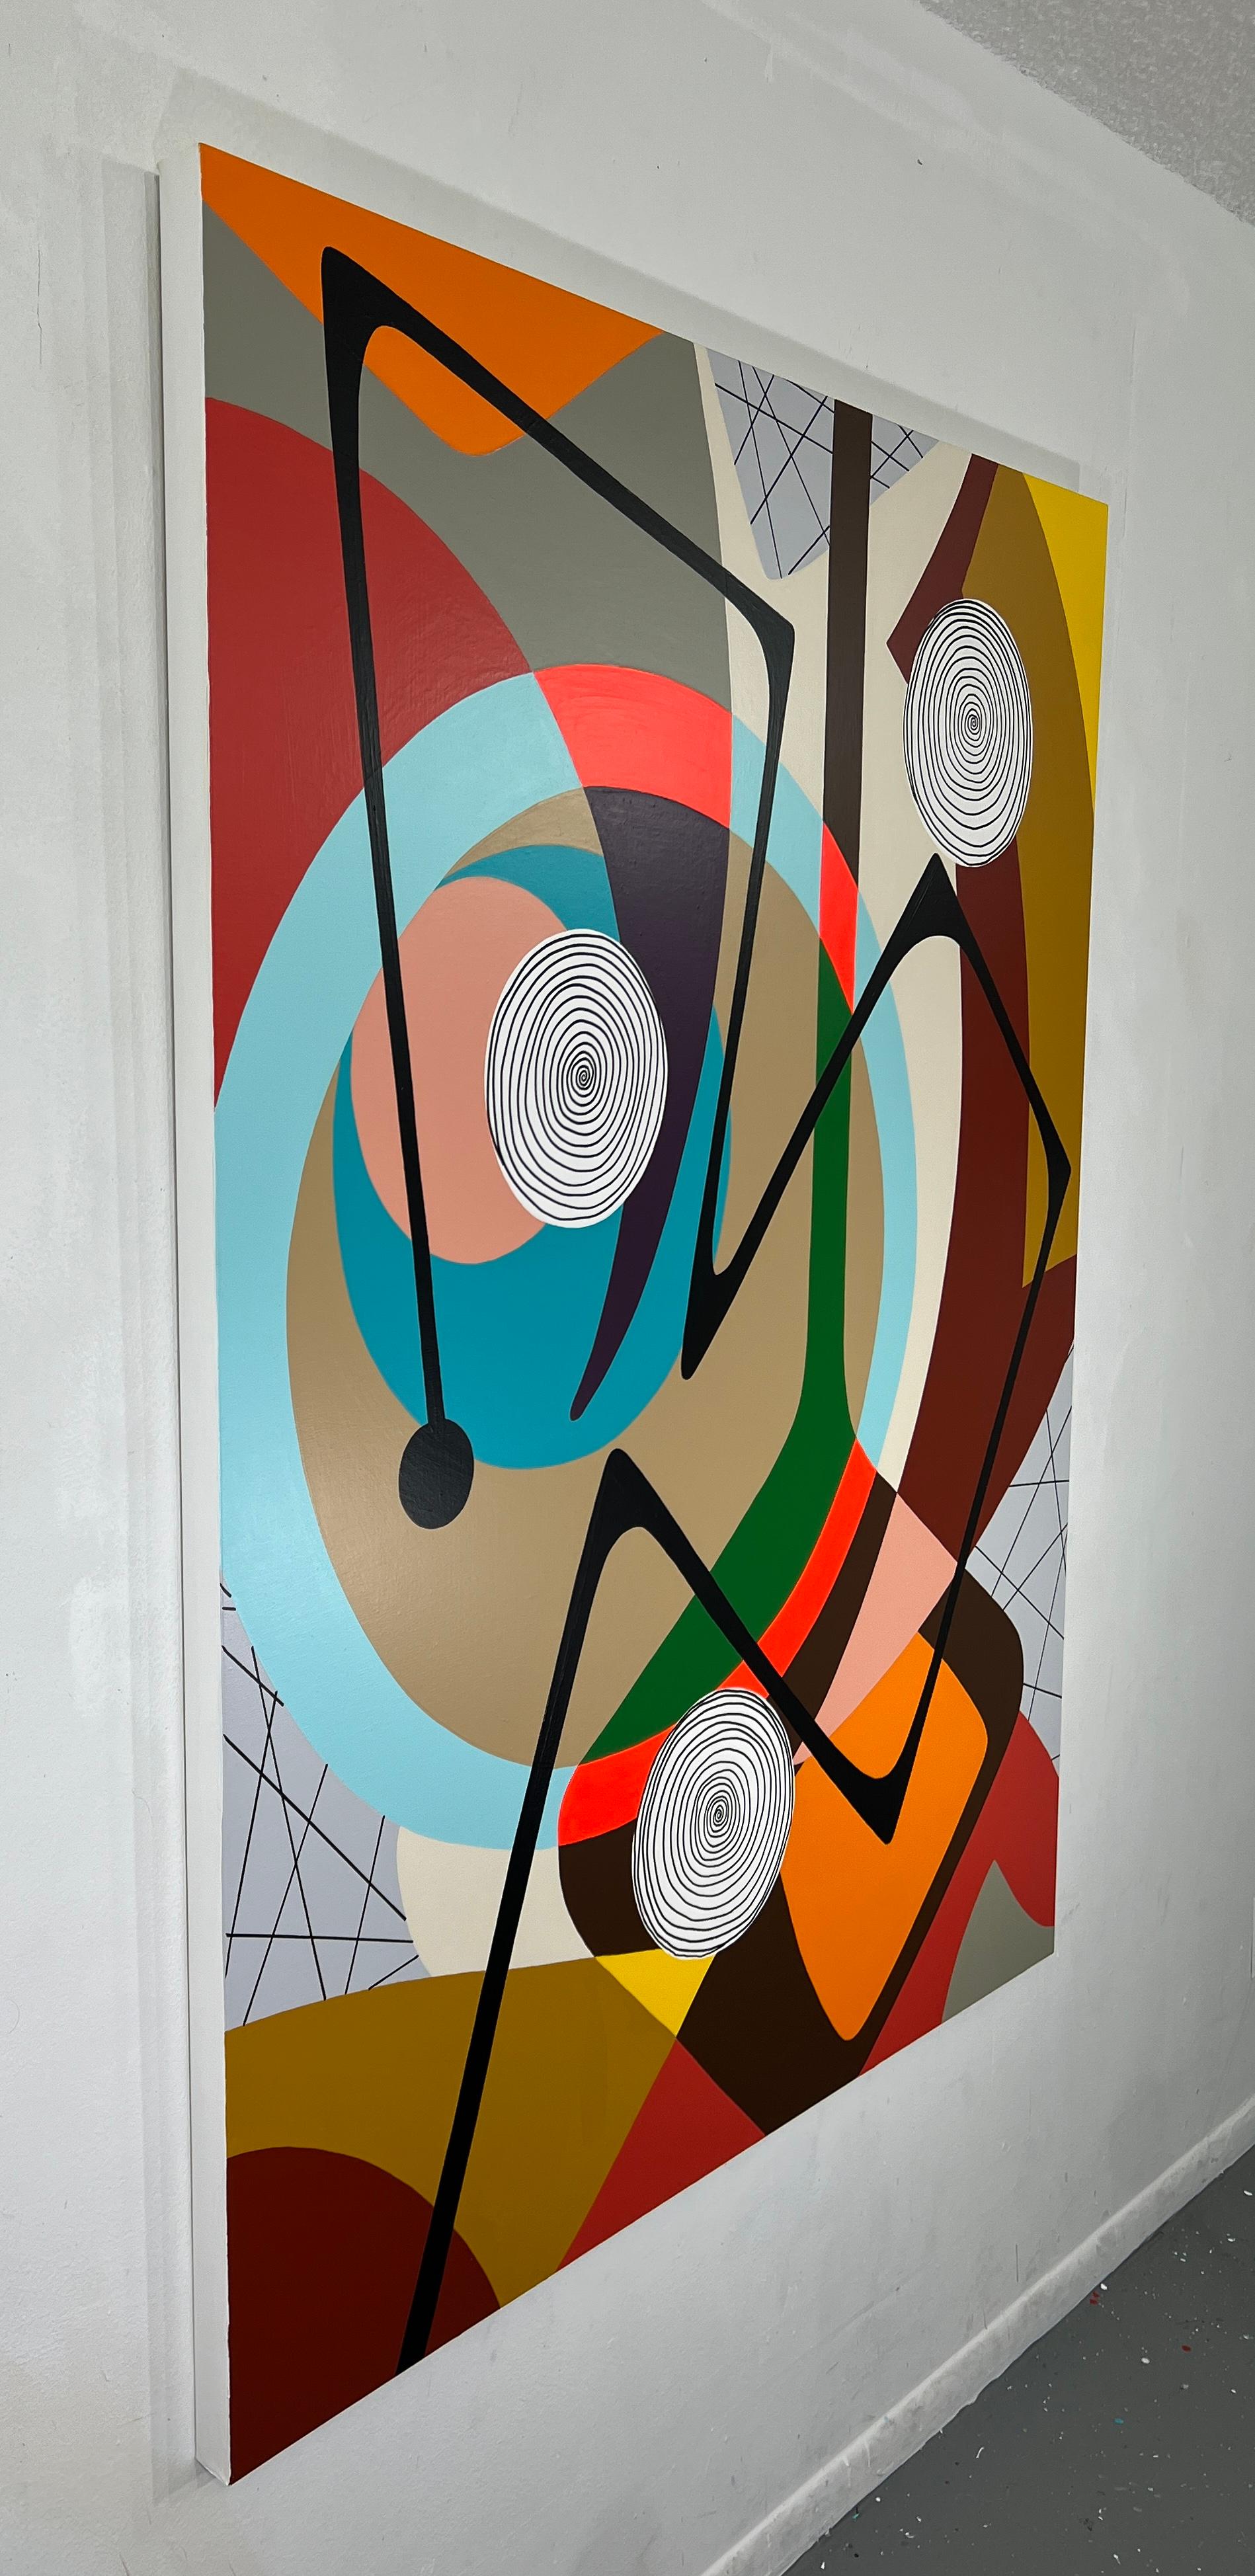 Music to my eyes - Abstract Geometric Painting by Amauri Torezan